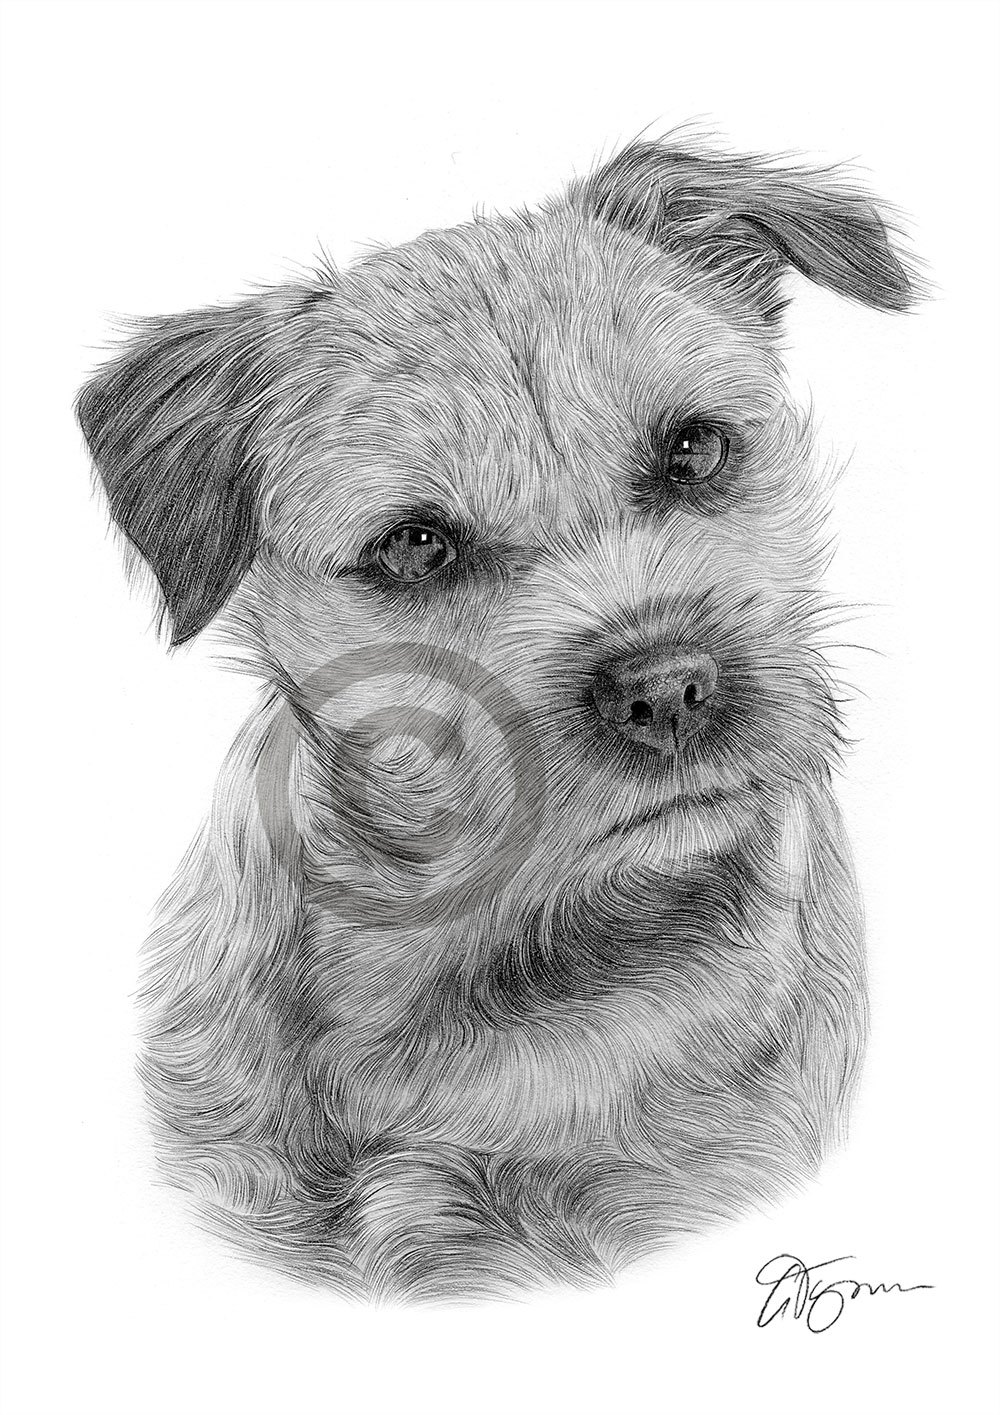 Dog BORDER TERRIER pencil drawing art A4 size by UK artist Pet Portrait ...